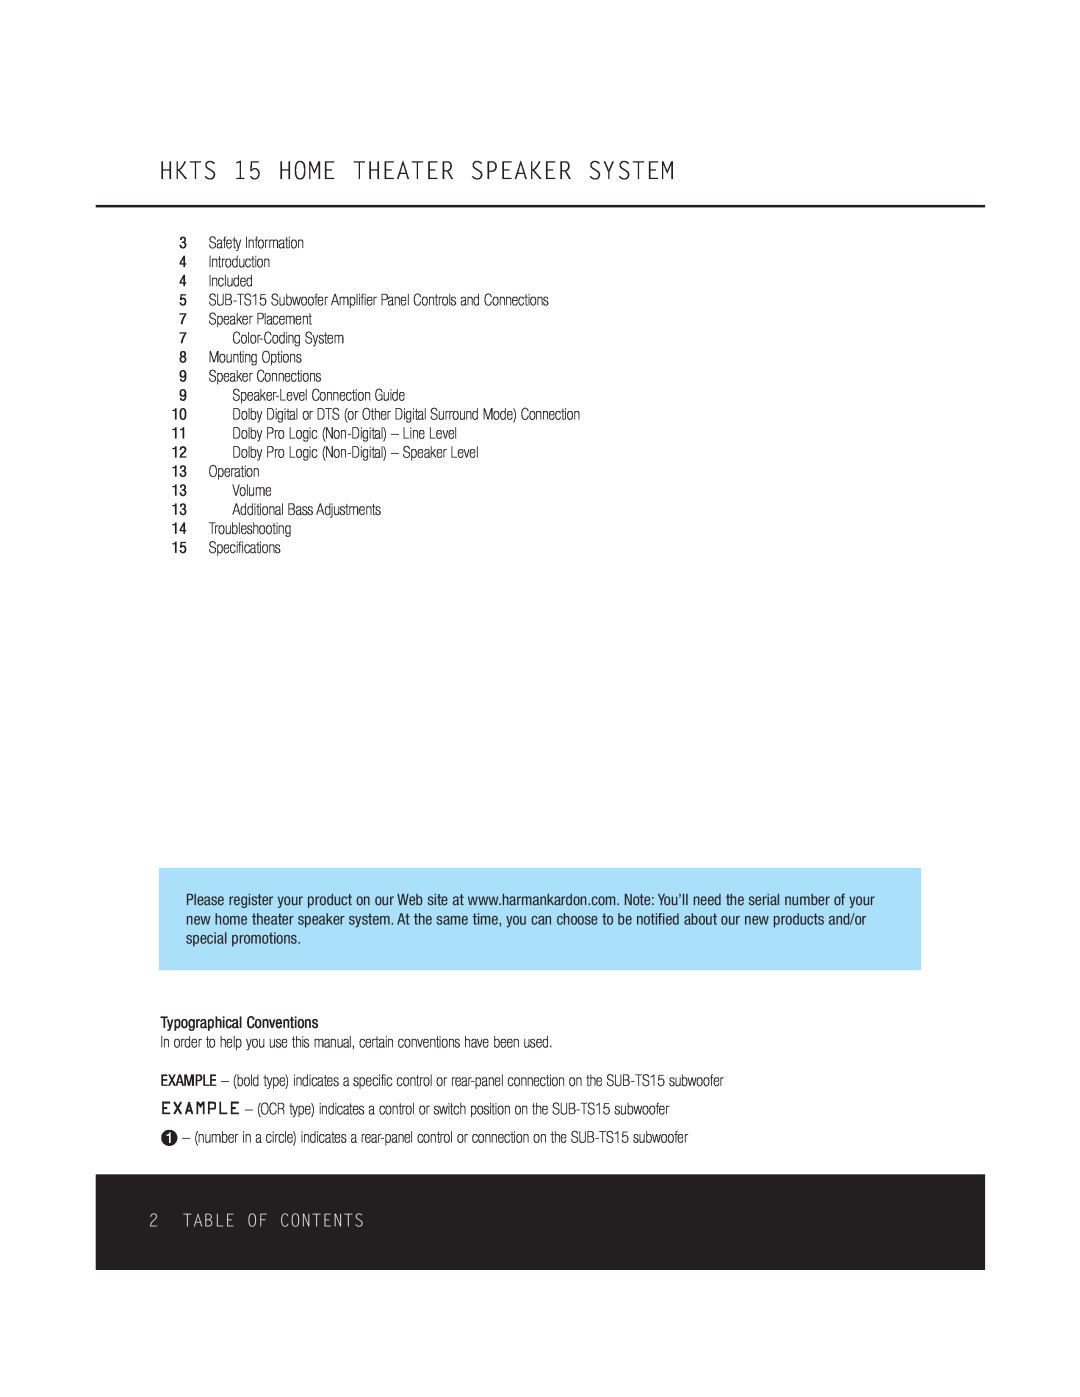 Harman-Kardon owner manual HKTS 15 HOME THEATER SPEAKER SYSTEM, Table Of Contents 